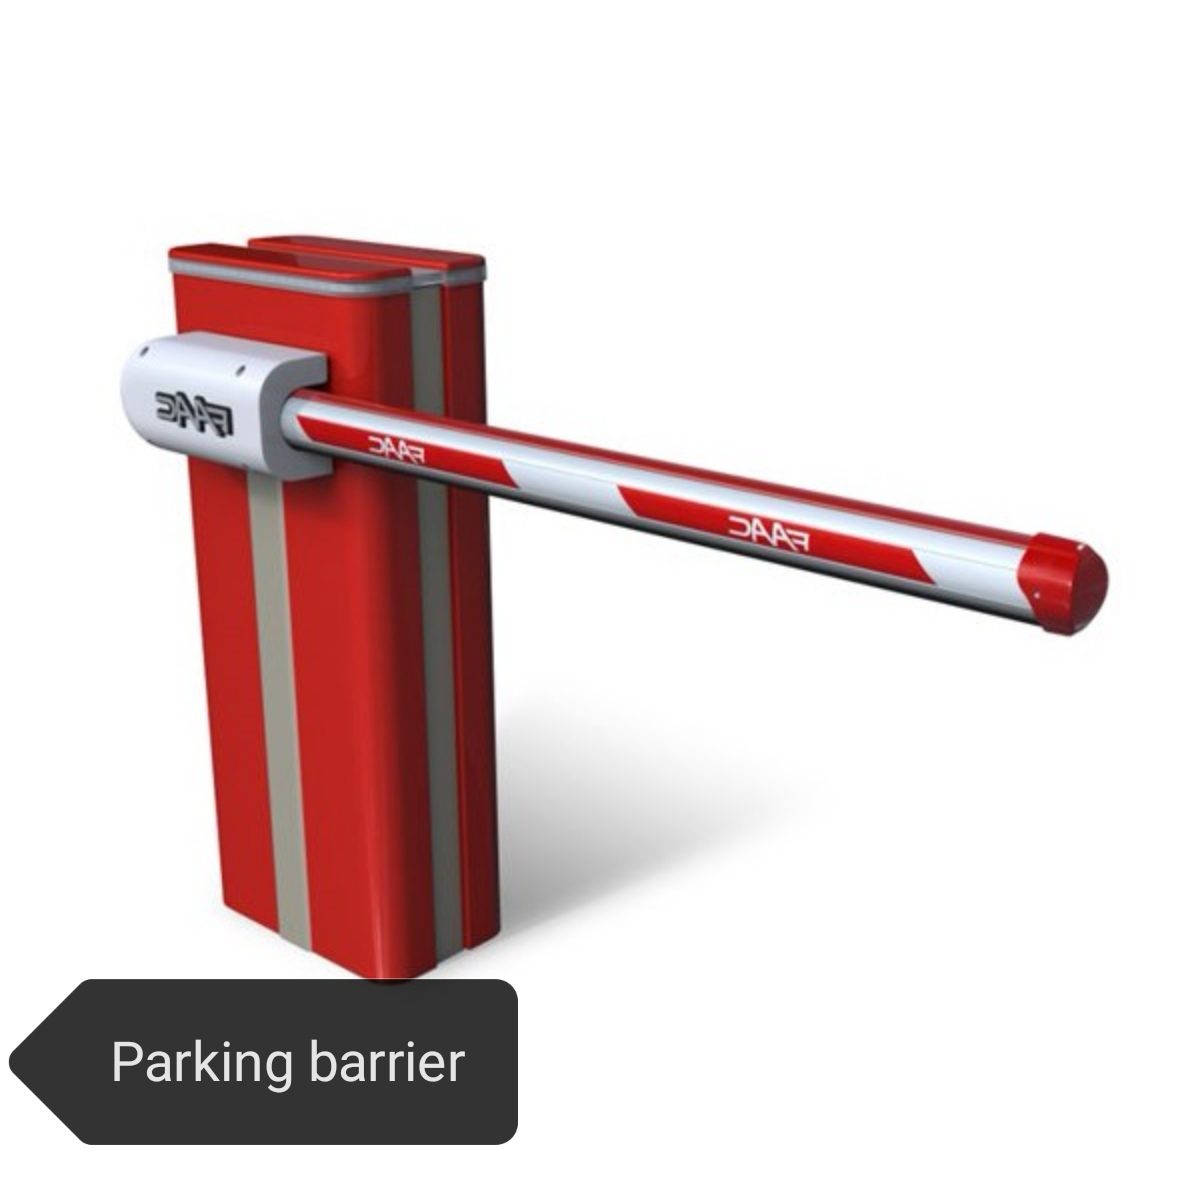 Parking Barrier